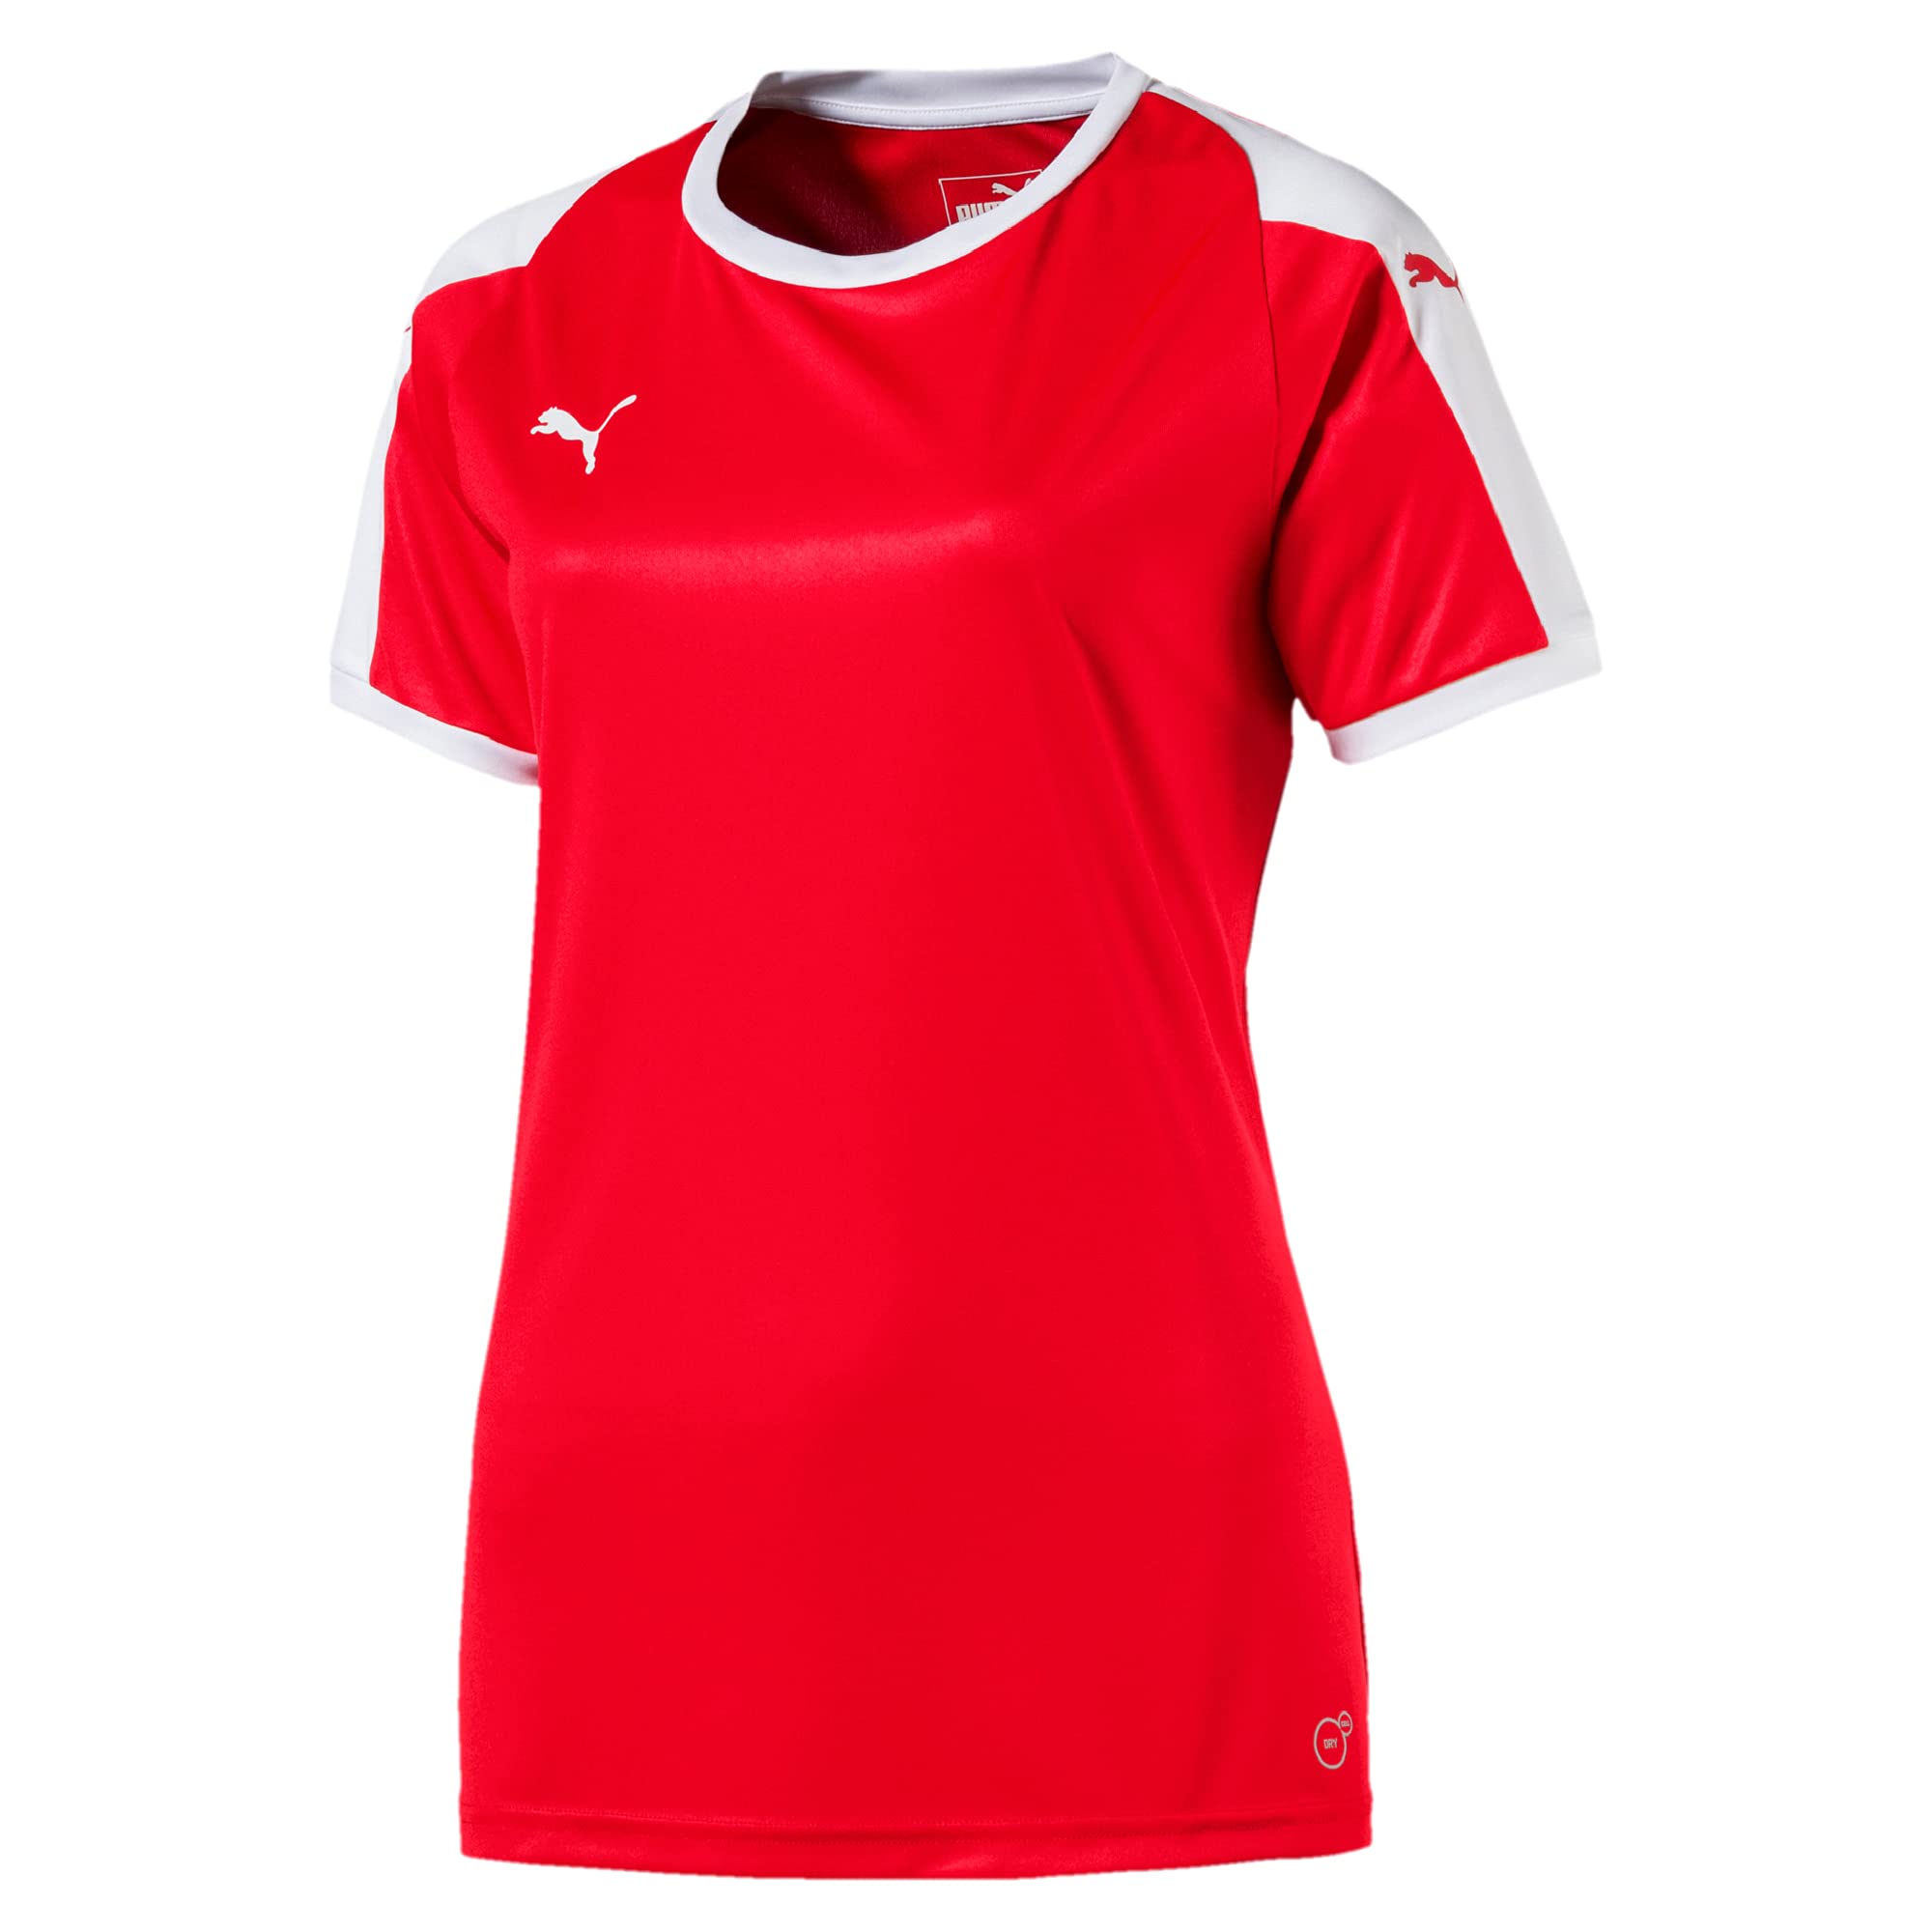 PUMA Womens Liga Jersey - Red/White - Medium